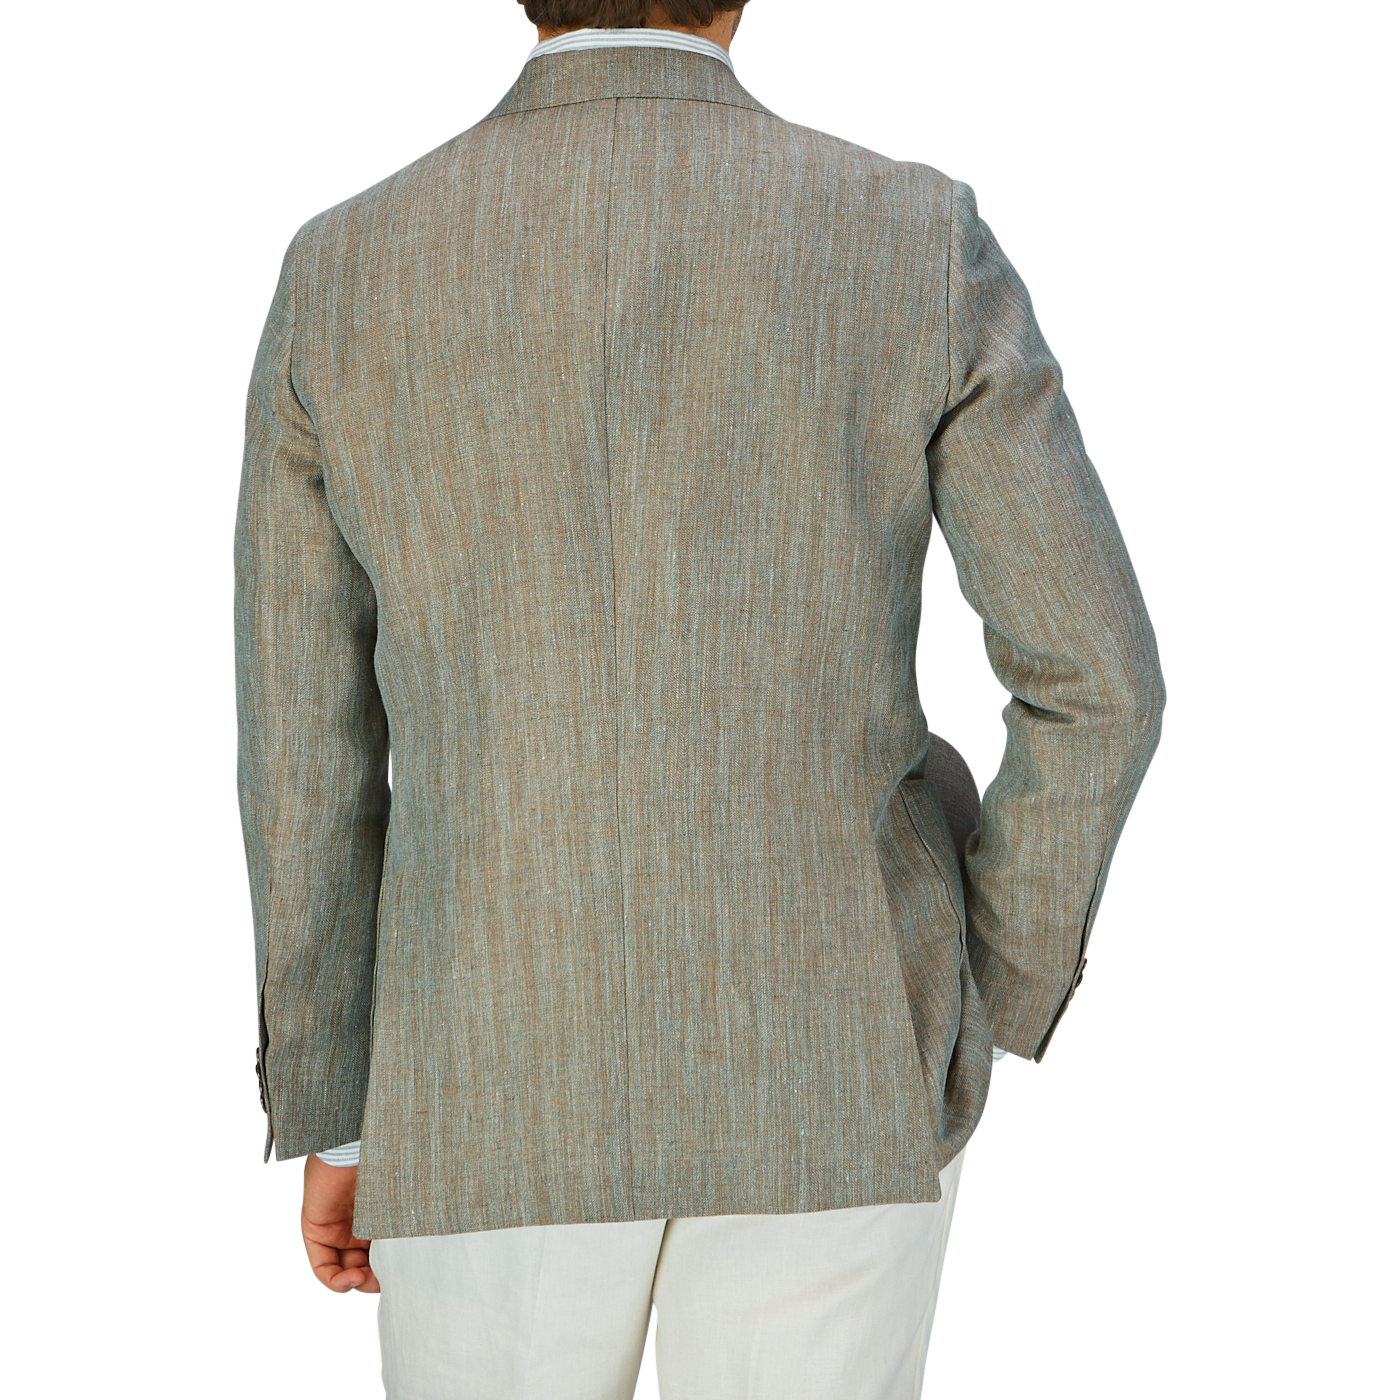 Rear view of a person wearing a Studio 73 Green Melange Herringbone Linen Blazer and white pants.